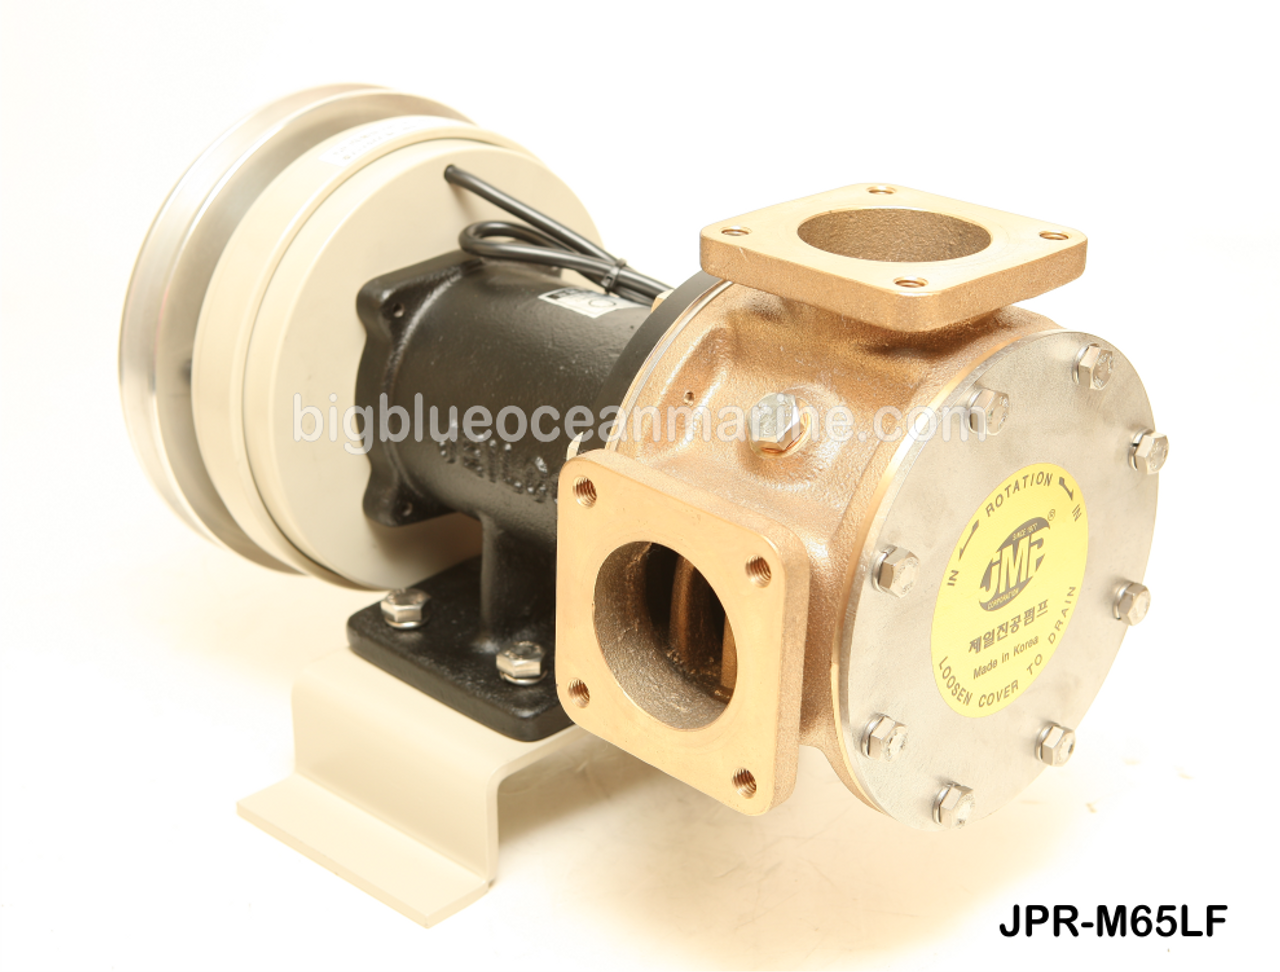 JMP ELECTRO-MAGNETIC CLUTCH PUMP #JPR-M65LF